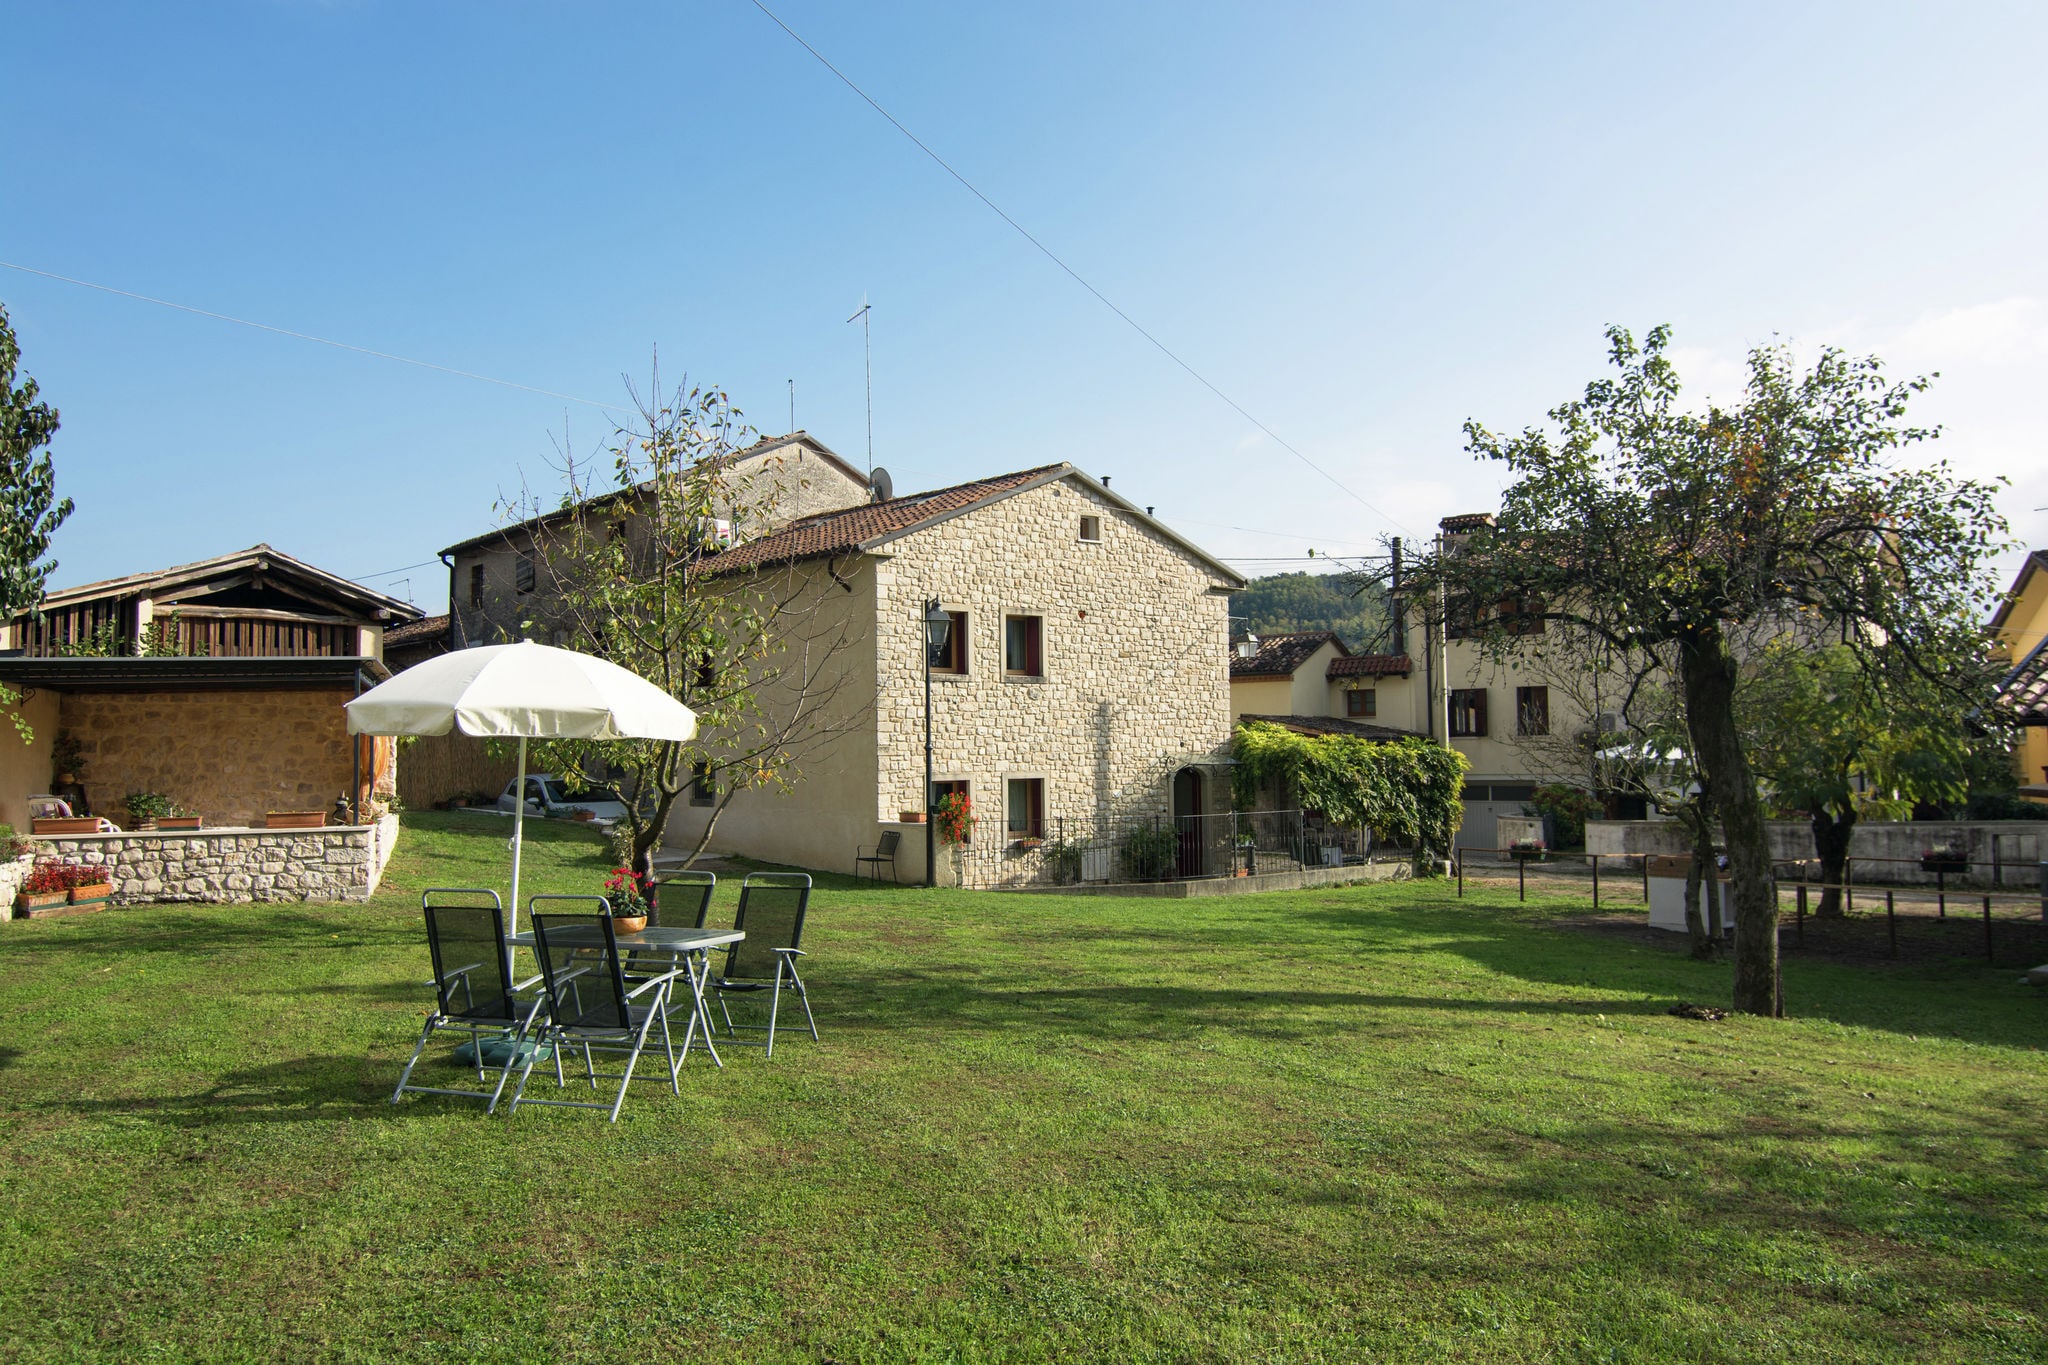 Delightful holiday home in Veneto, Treviso province.